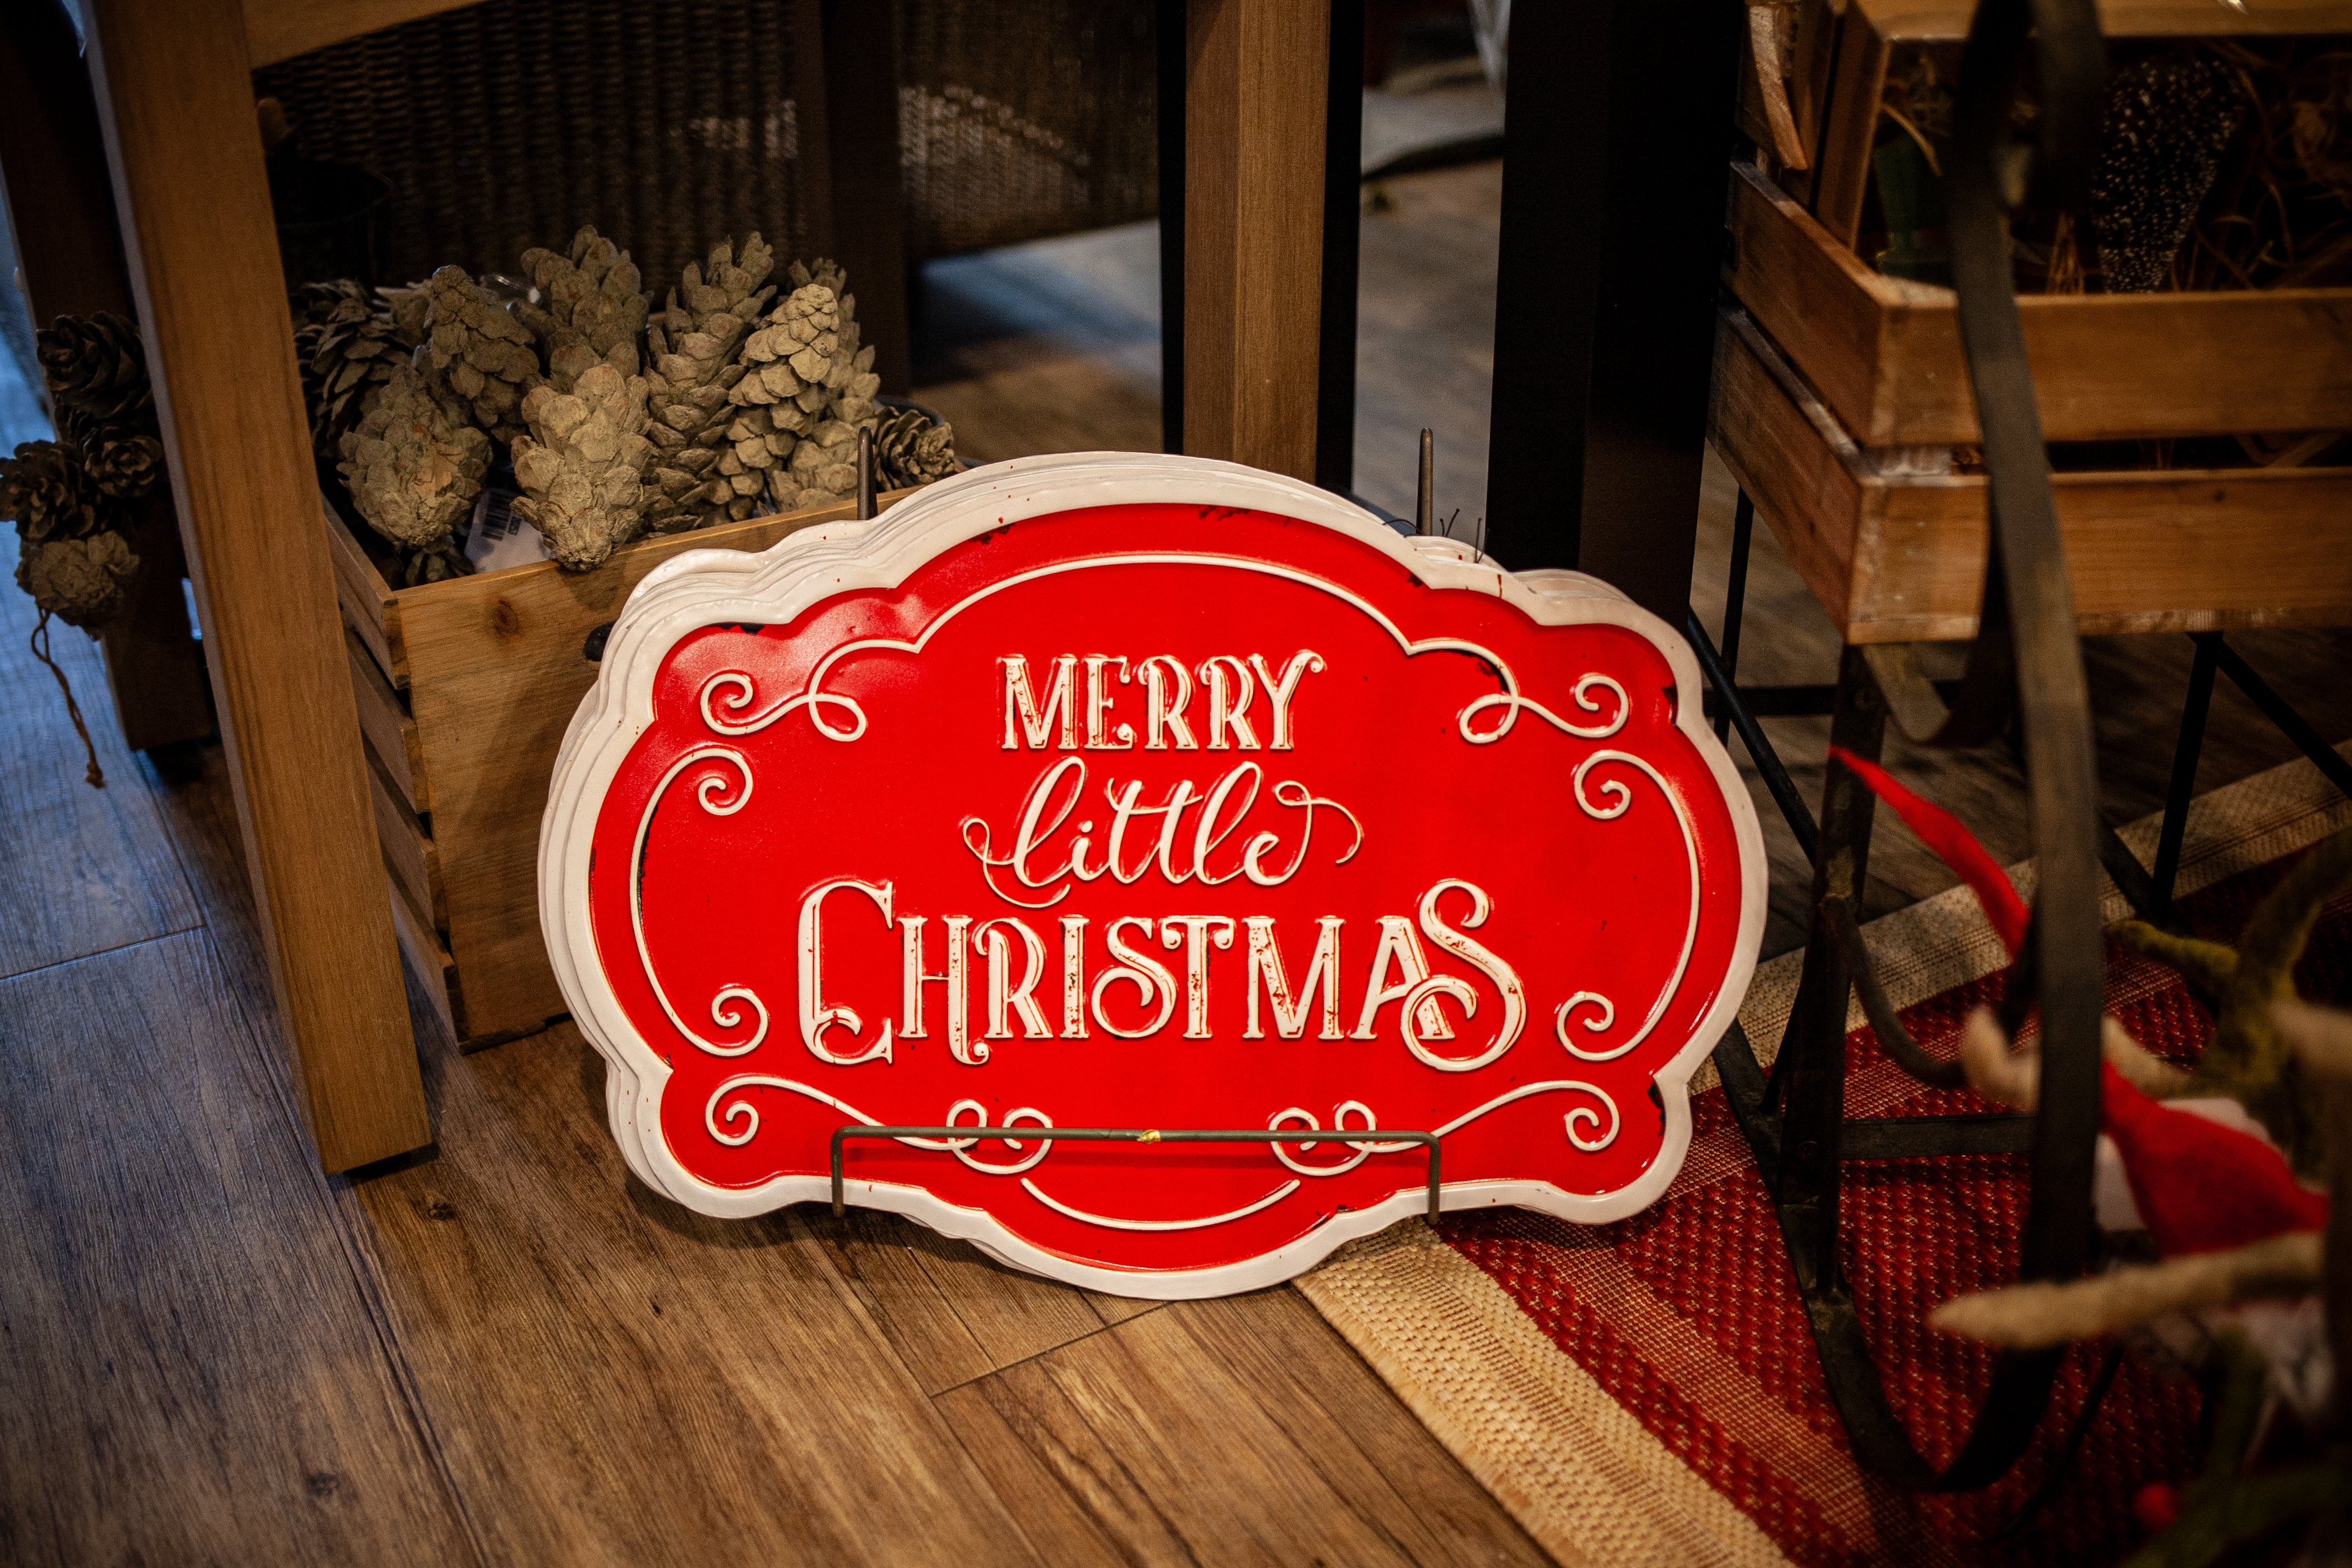 Merry Little Christmas Wall Decor Seasonal & Holiday Decorations 12040001